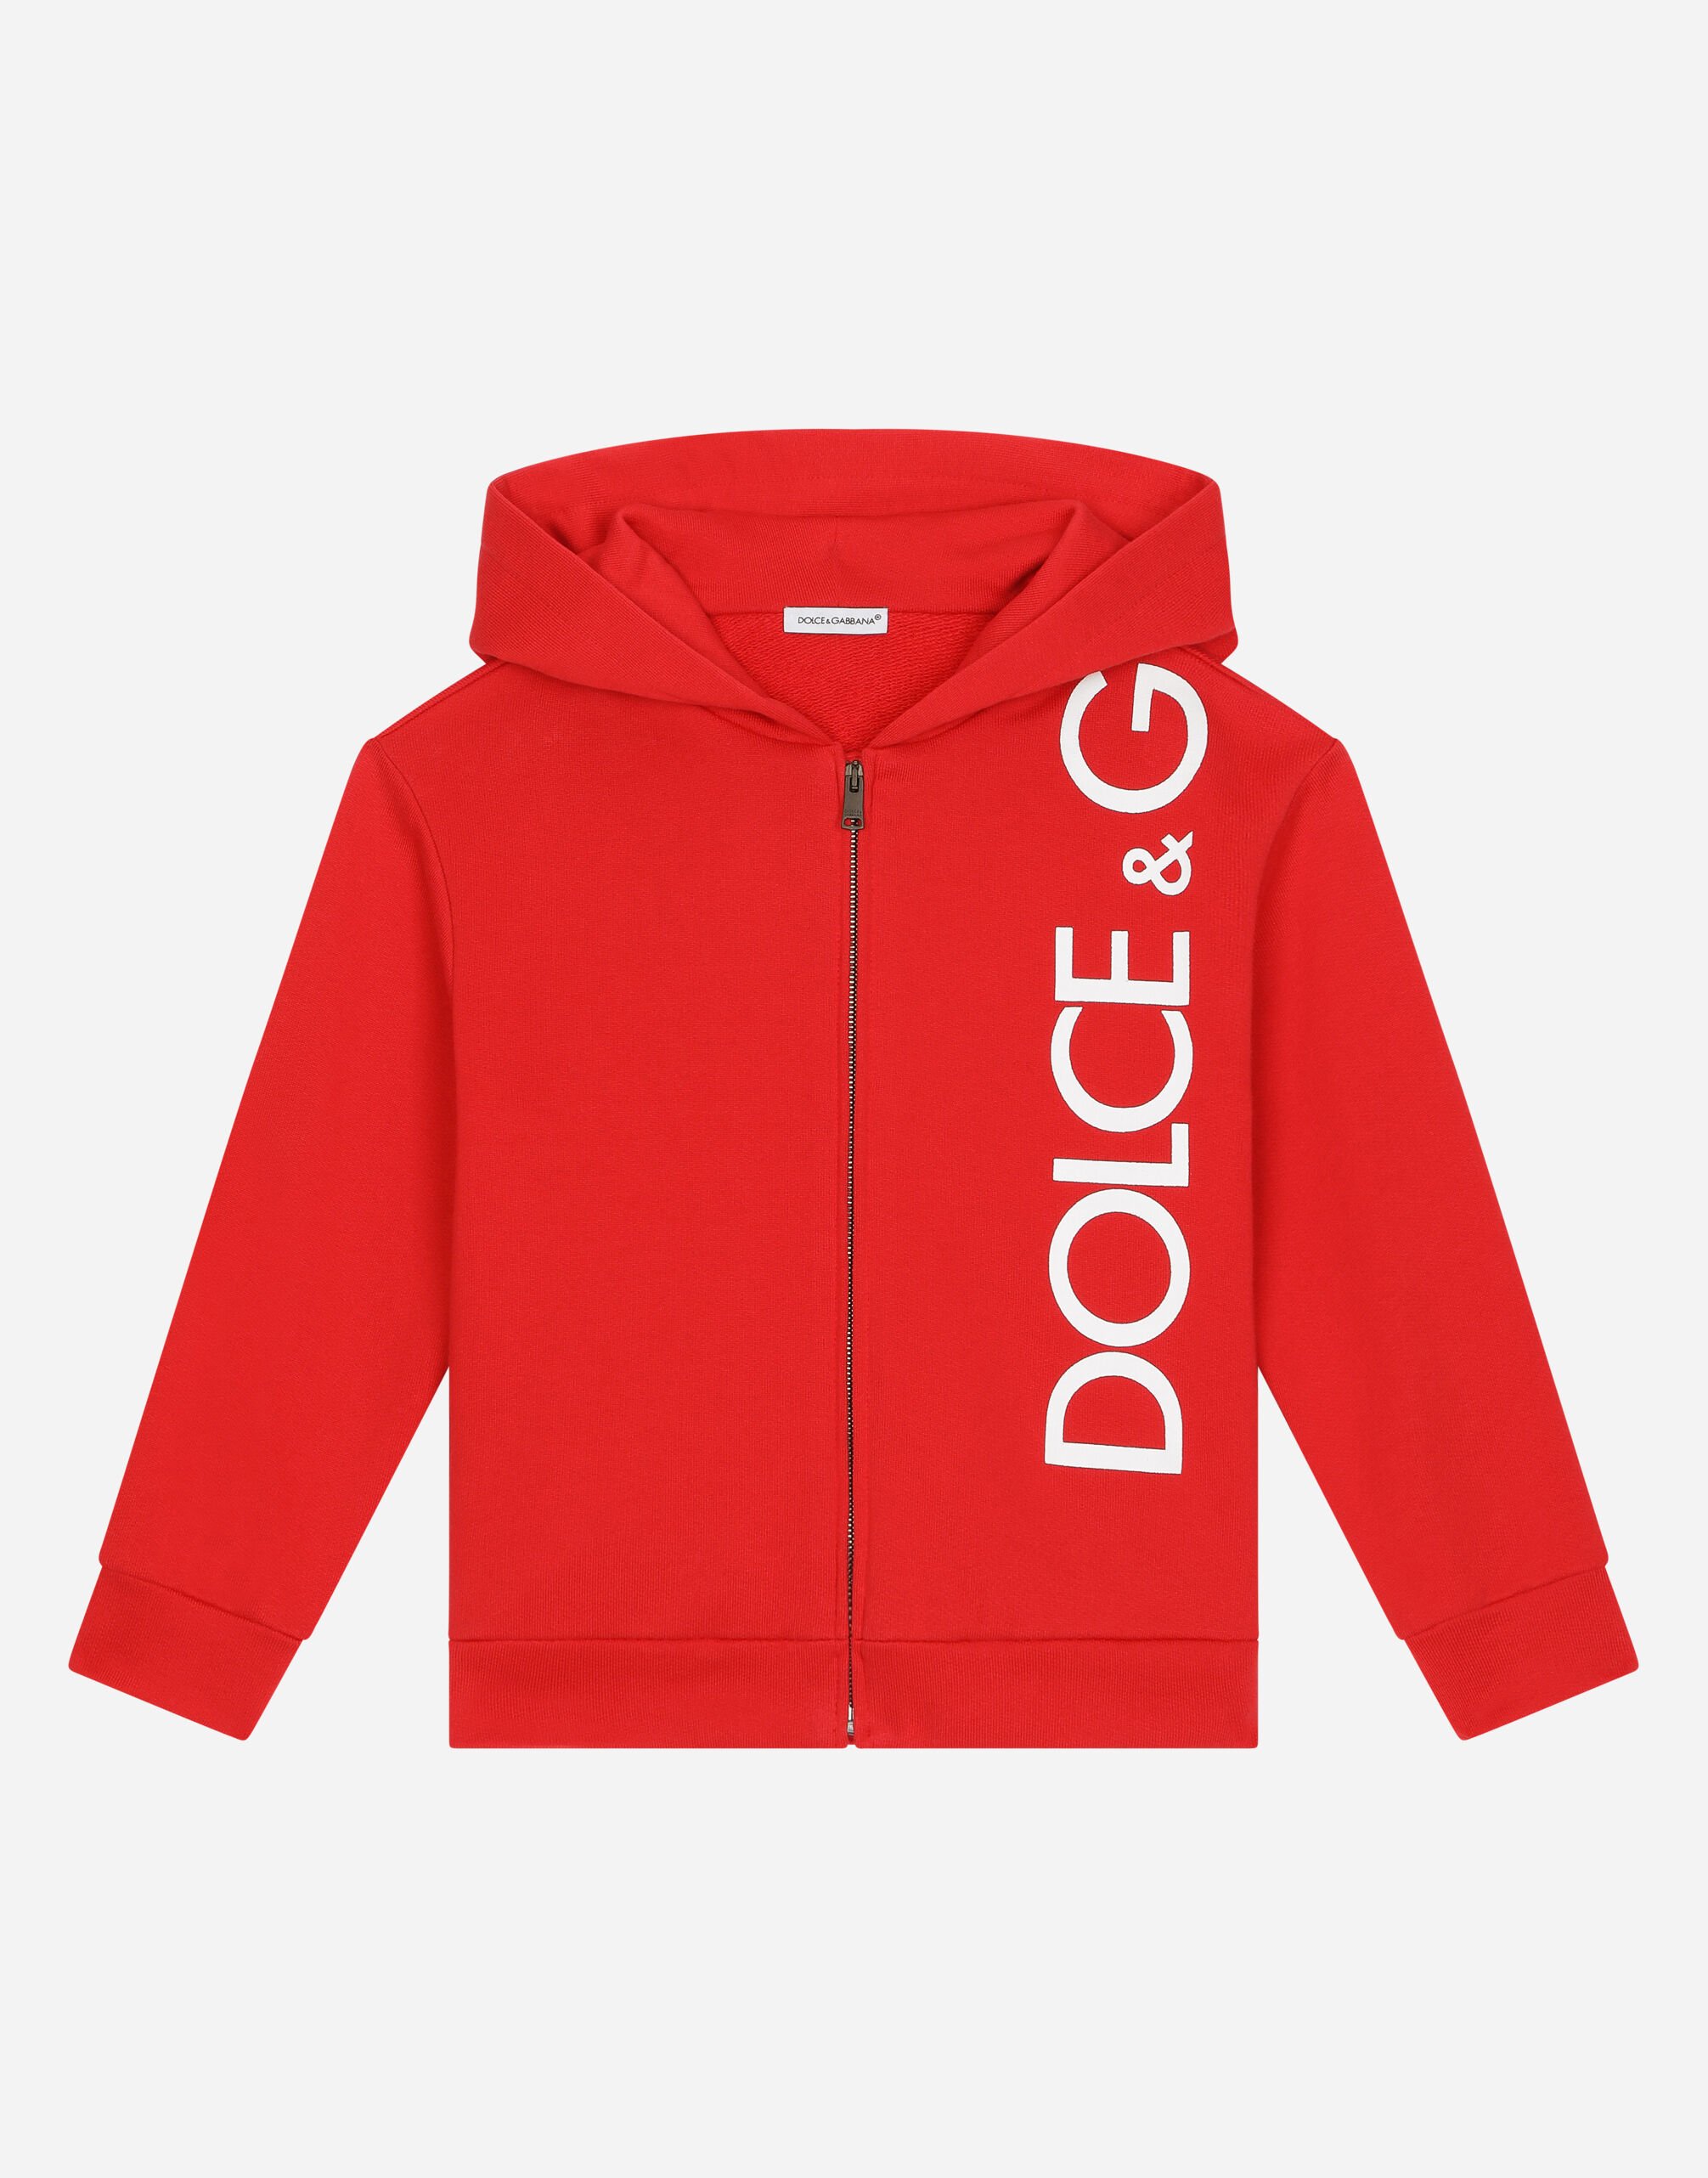 Dolce&Gabbana Zip-up jersey hoodie with logo print Red L5JW9YG7K5N